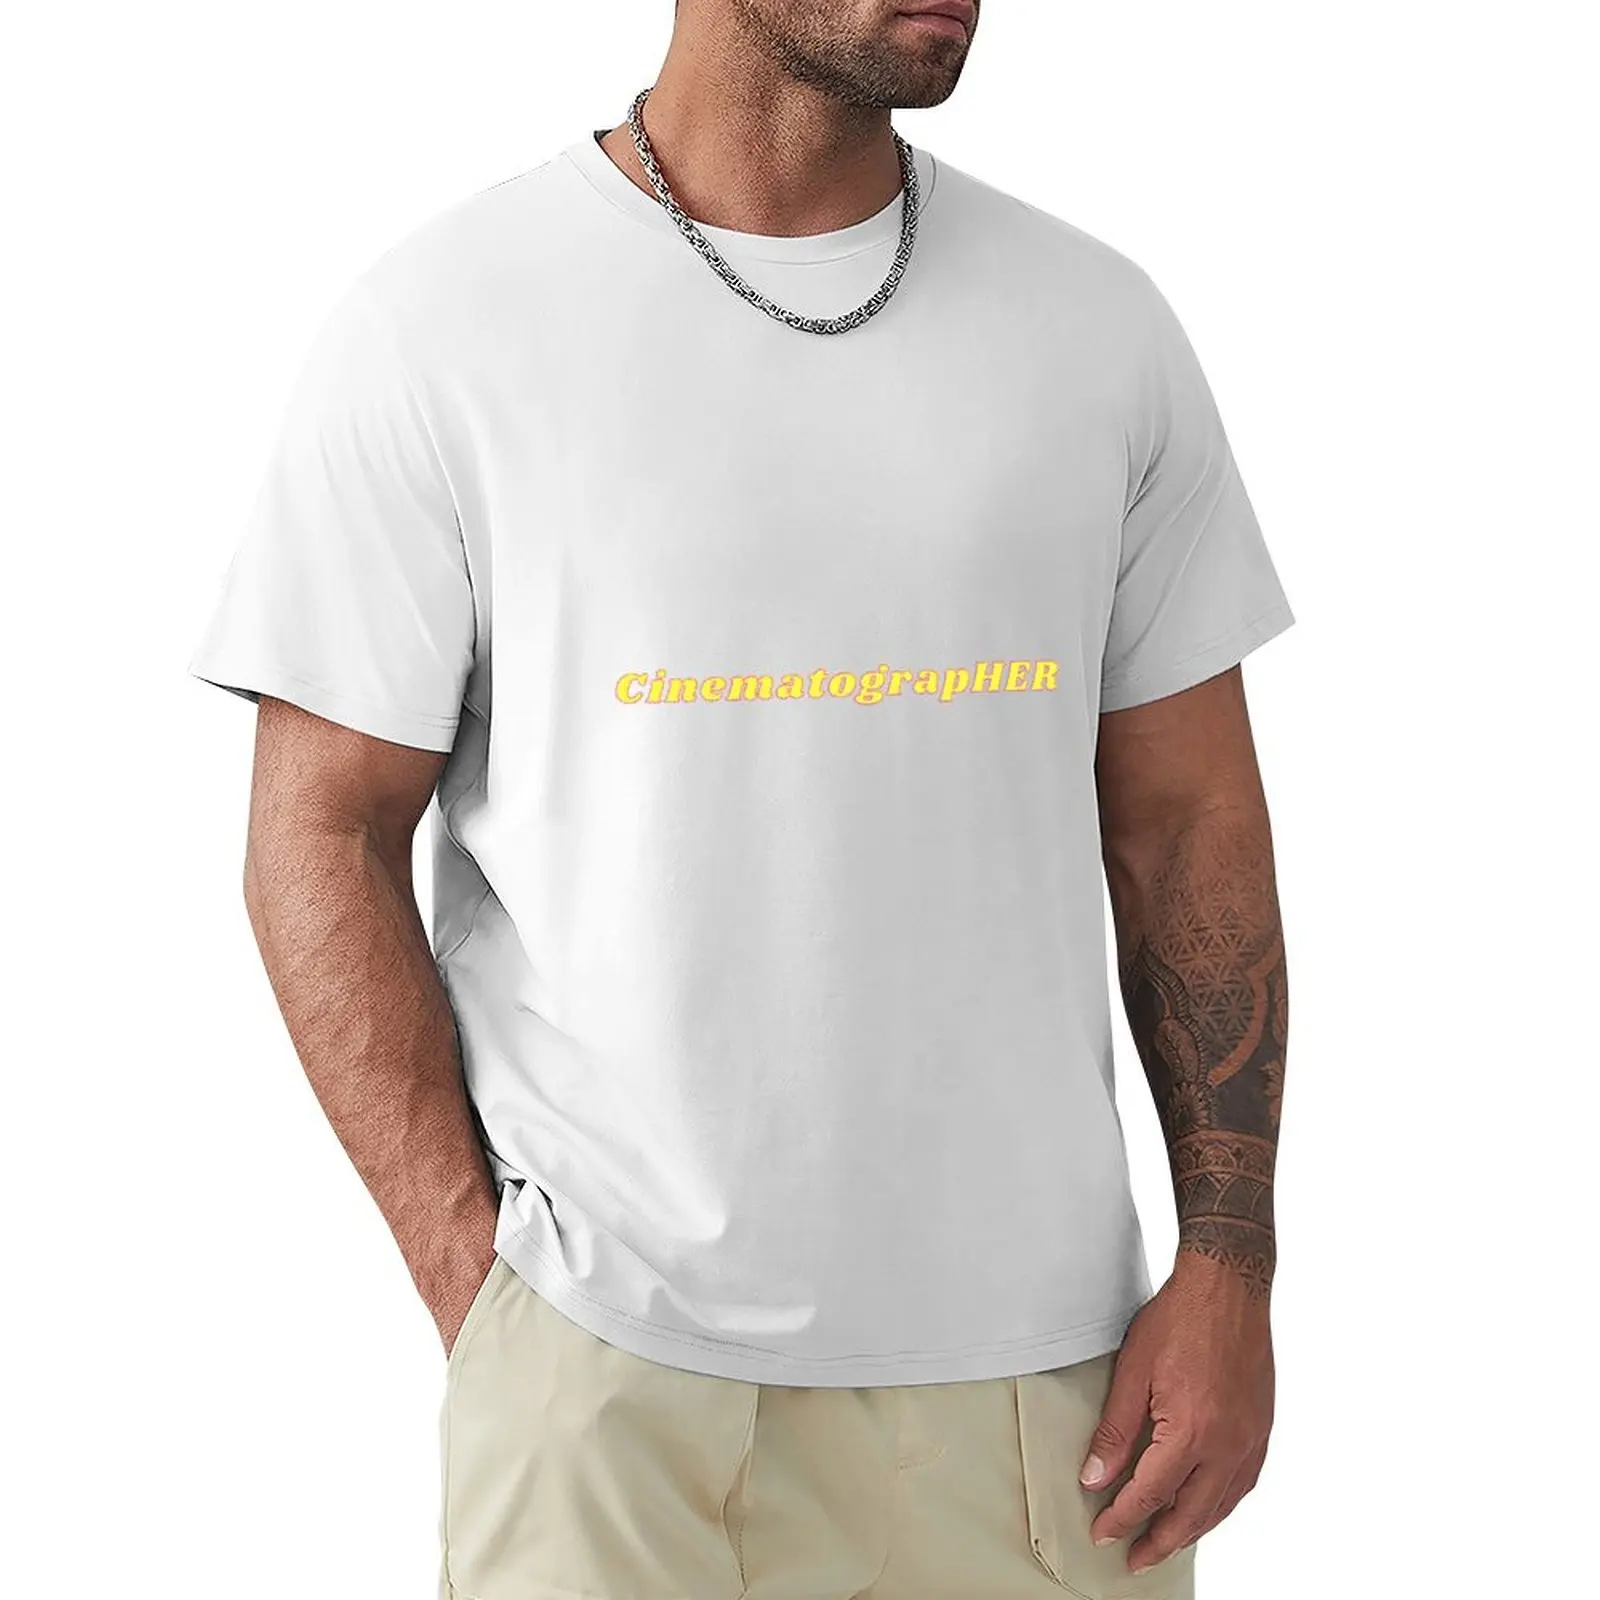 

CinematograpHER graphic T-Shirt funnys sports fans new edition plain white t shirts men